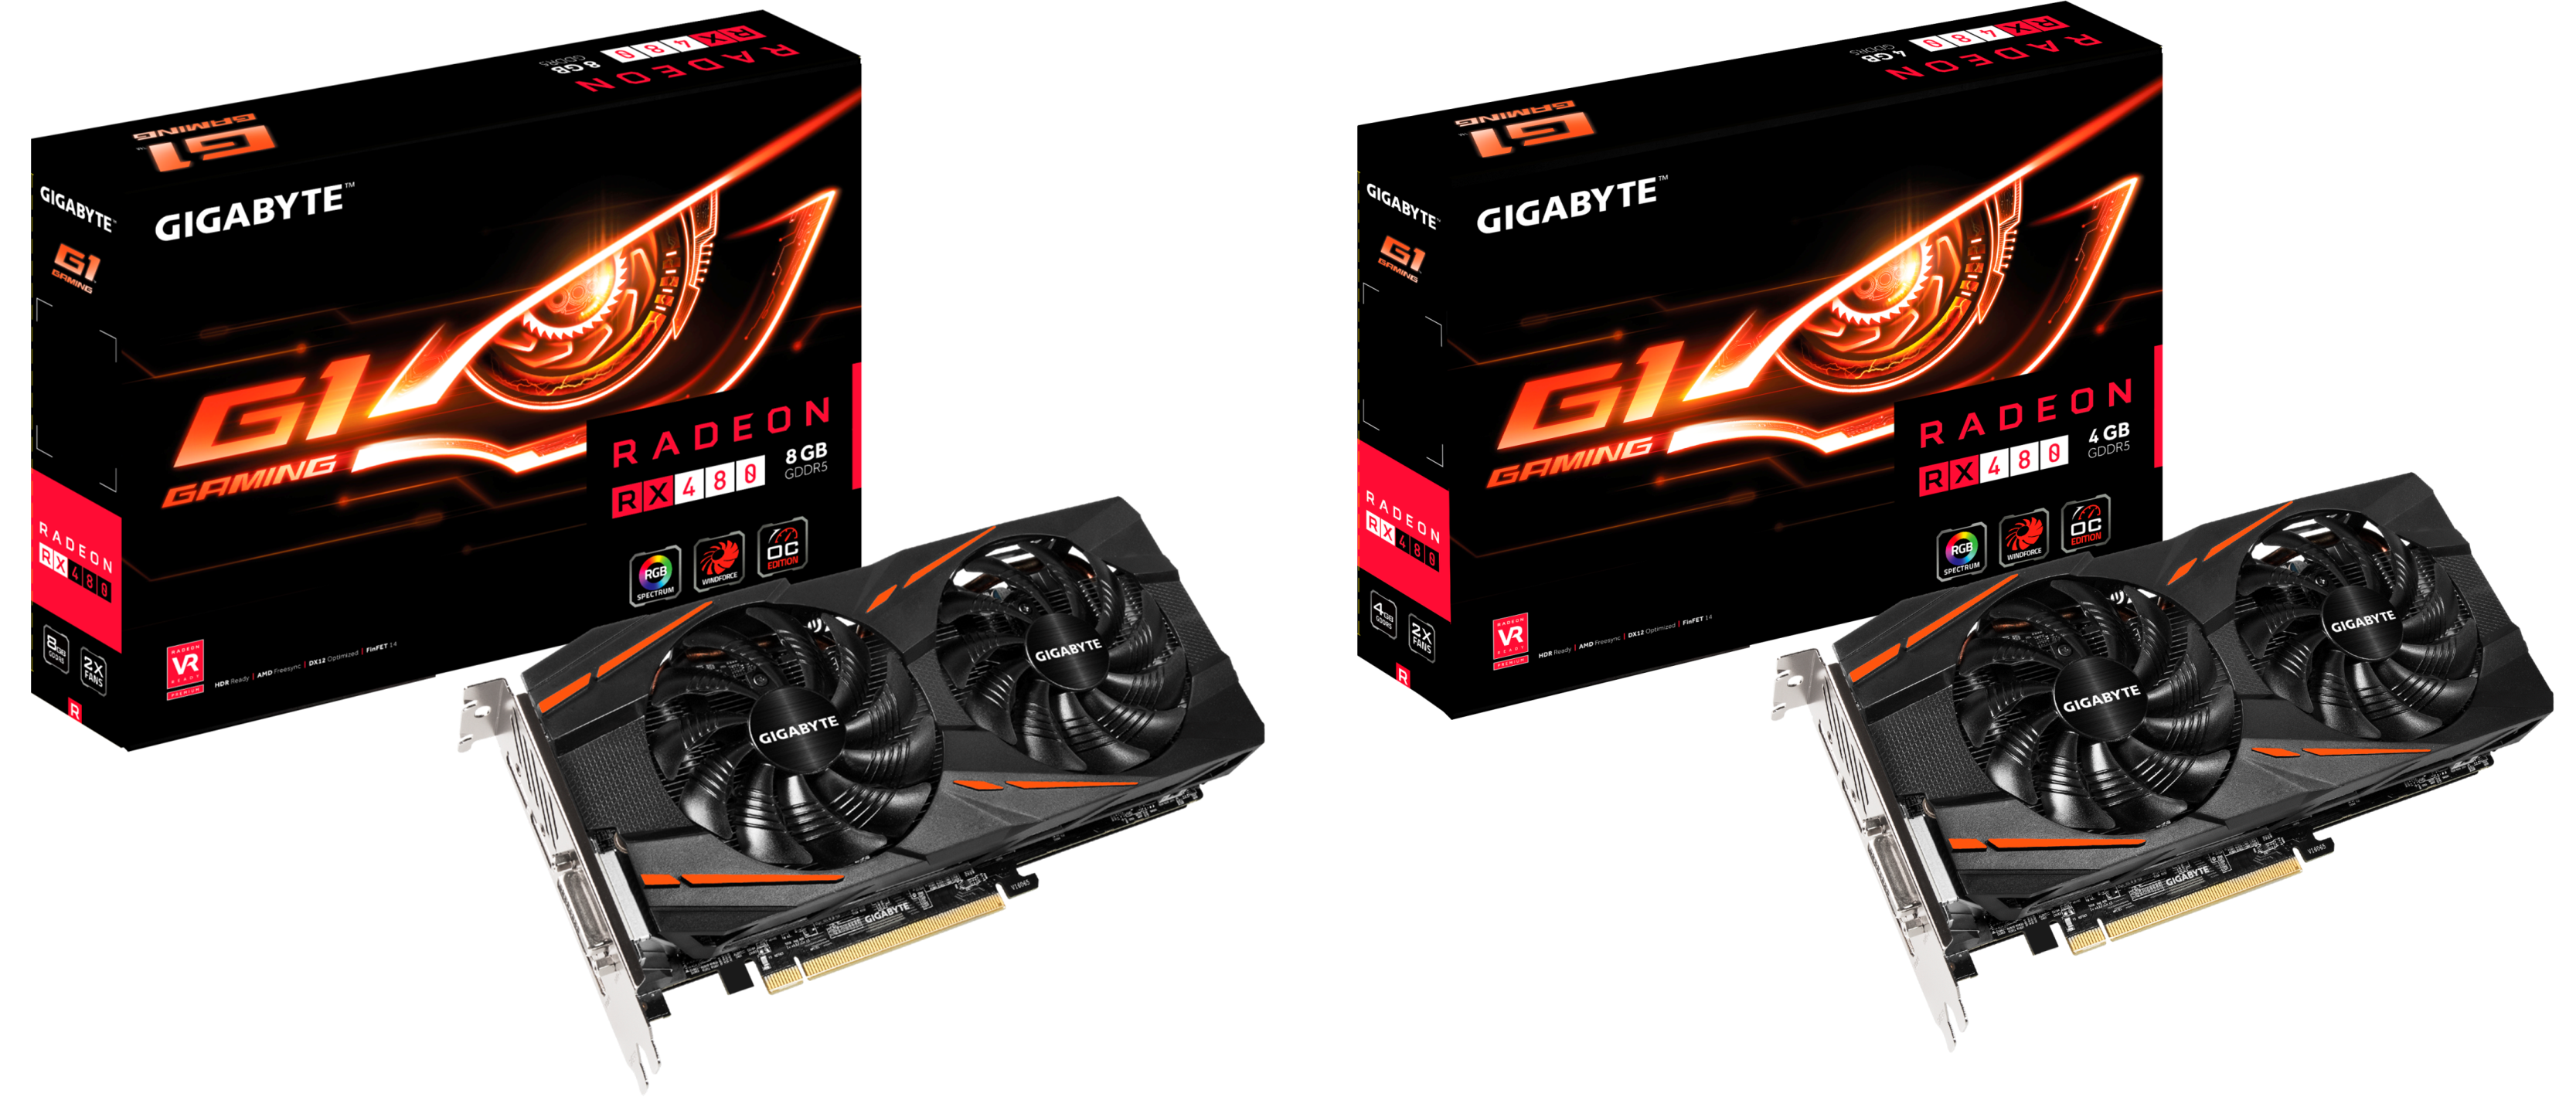 Factory New Gigabyte AMD Radeon RX-480 GPU Graphics Card 4GB 